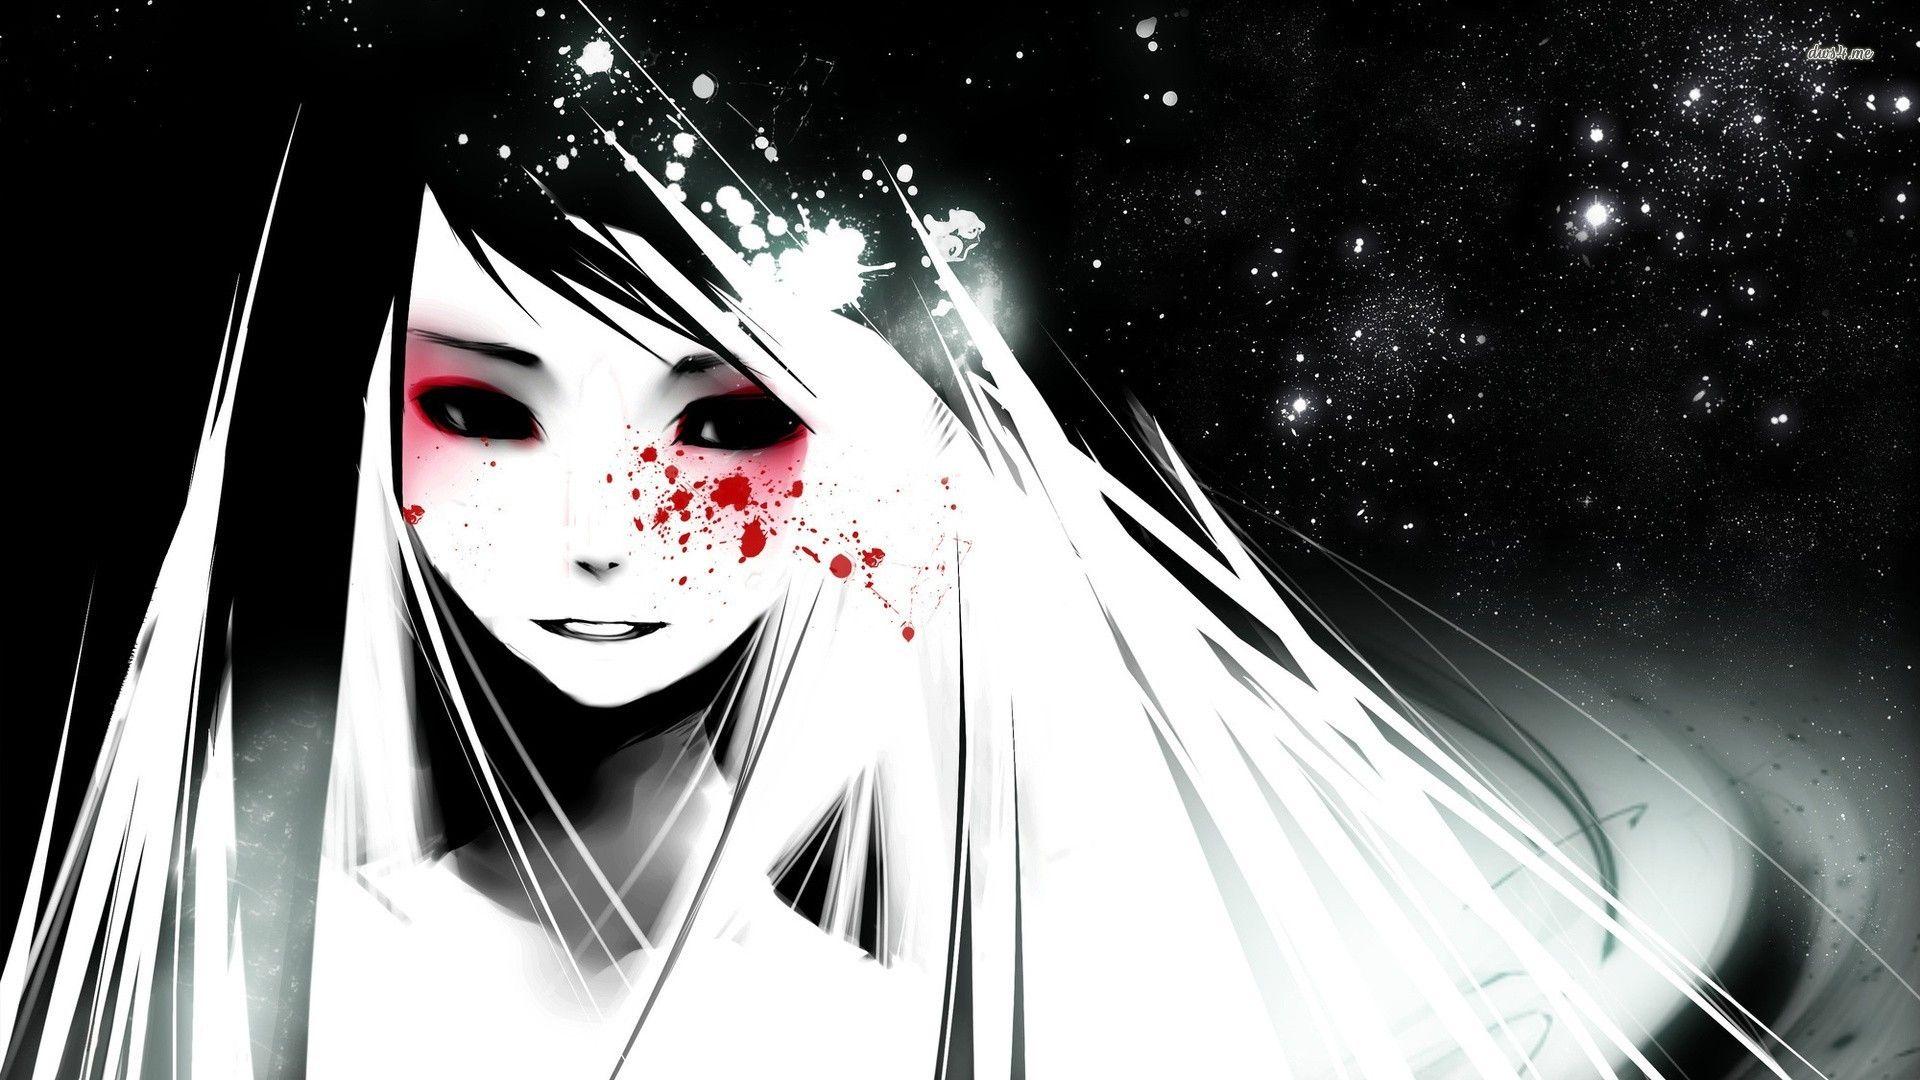 Dark Anime Girl Wallpaper HD